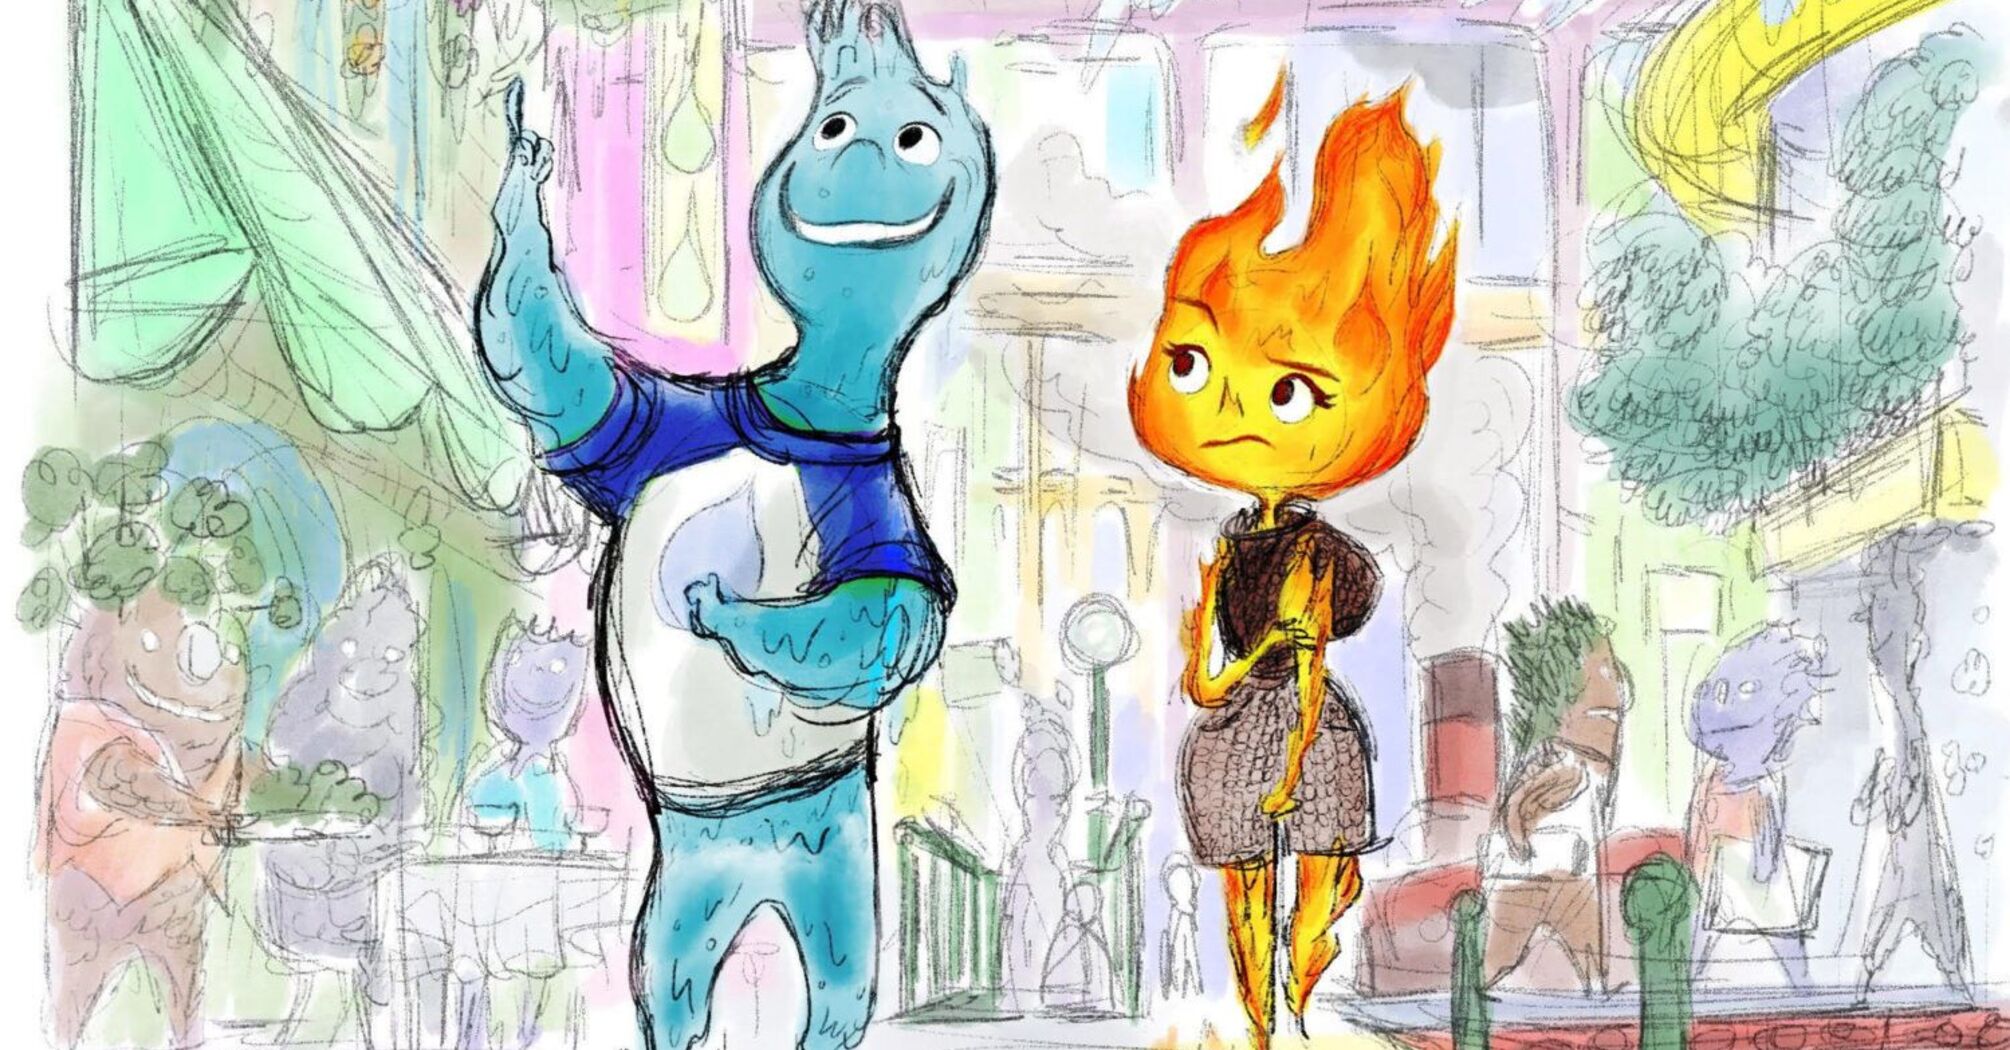 5 heartwarming Pixar animated films